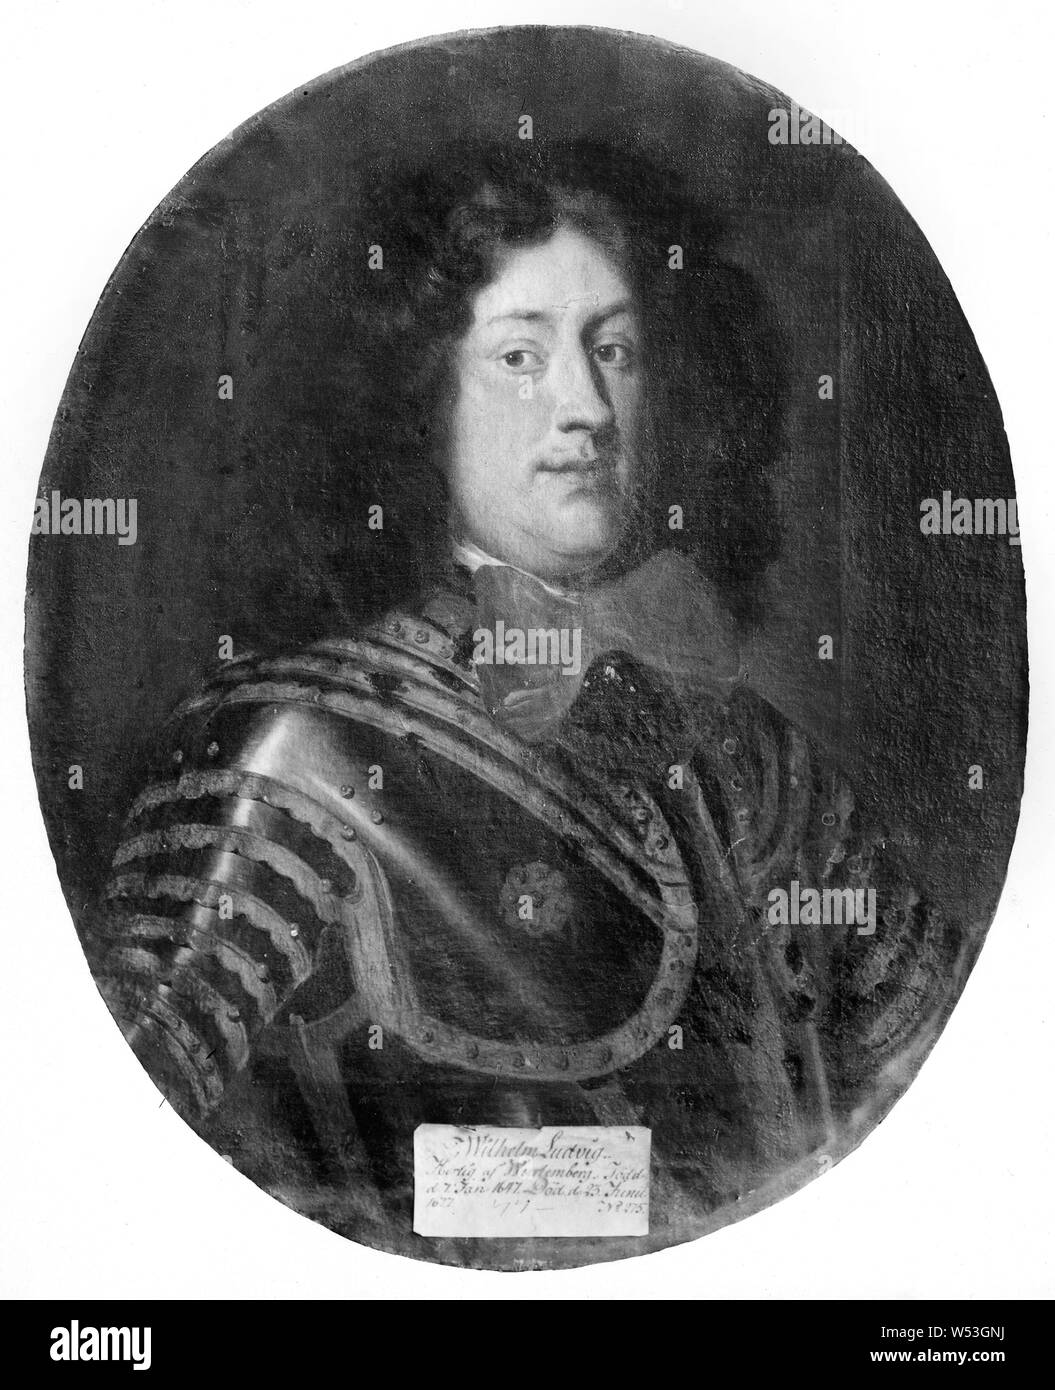 Vilhelm Ludvig, 1647-1677, duca di Würtemberg-Stuttgart, pittura, olio su tela, altezza 81 cm (31,8 pollici), Larghezza 66 cm (25,9 pollici) Foto Stock